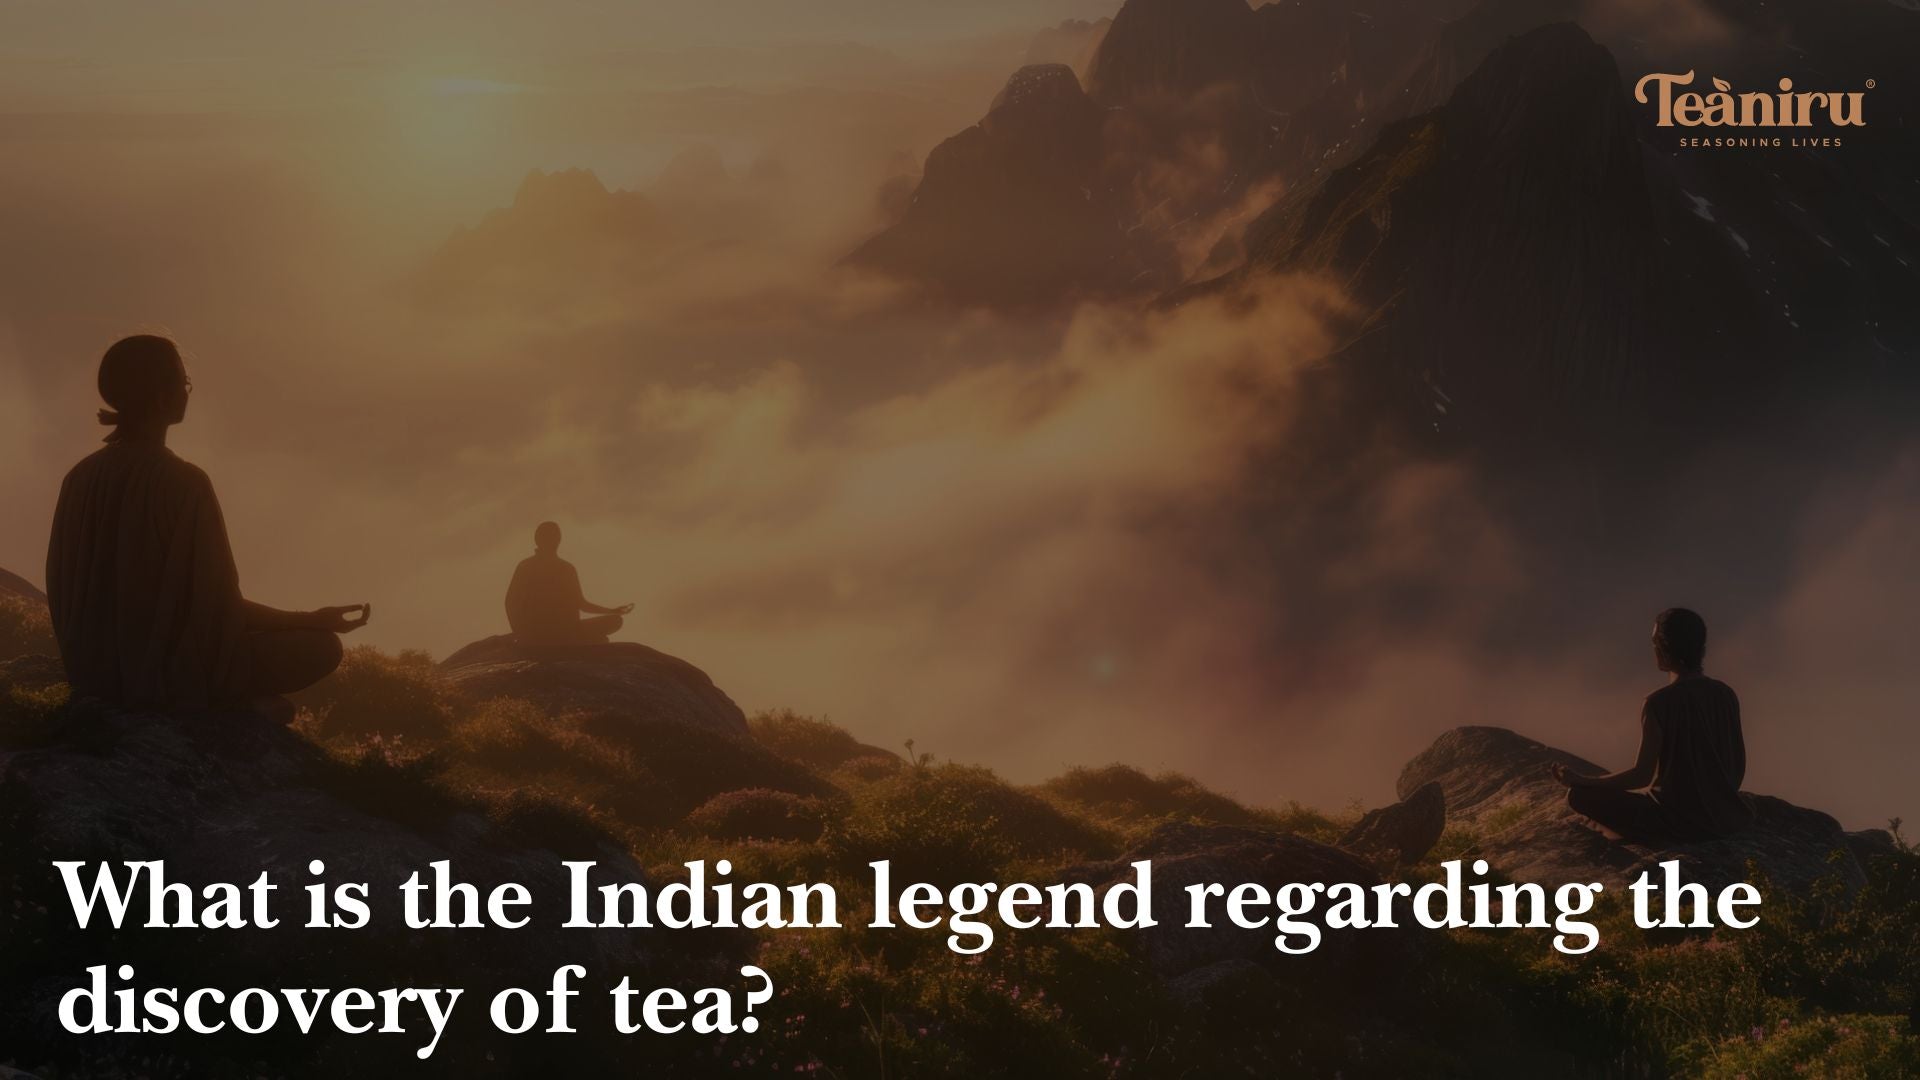 Indian legend regarding the discovery of tea